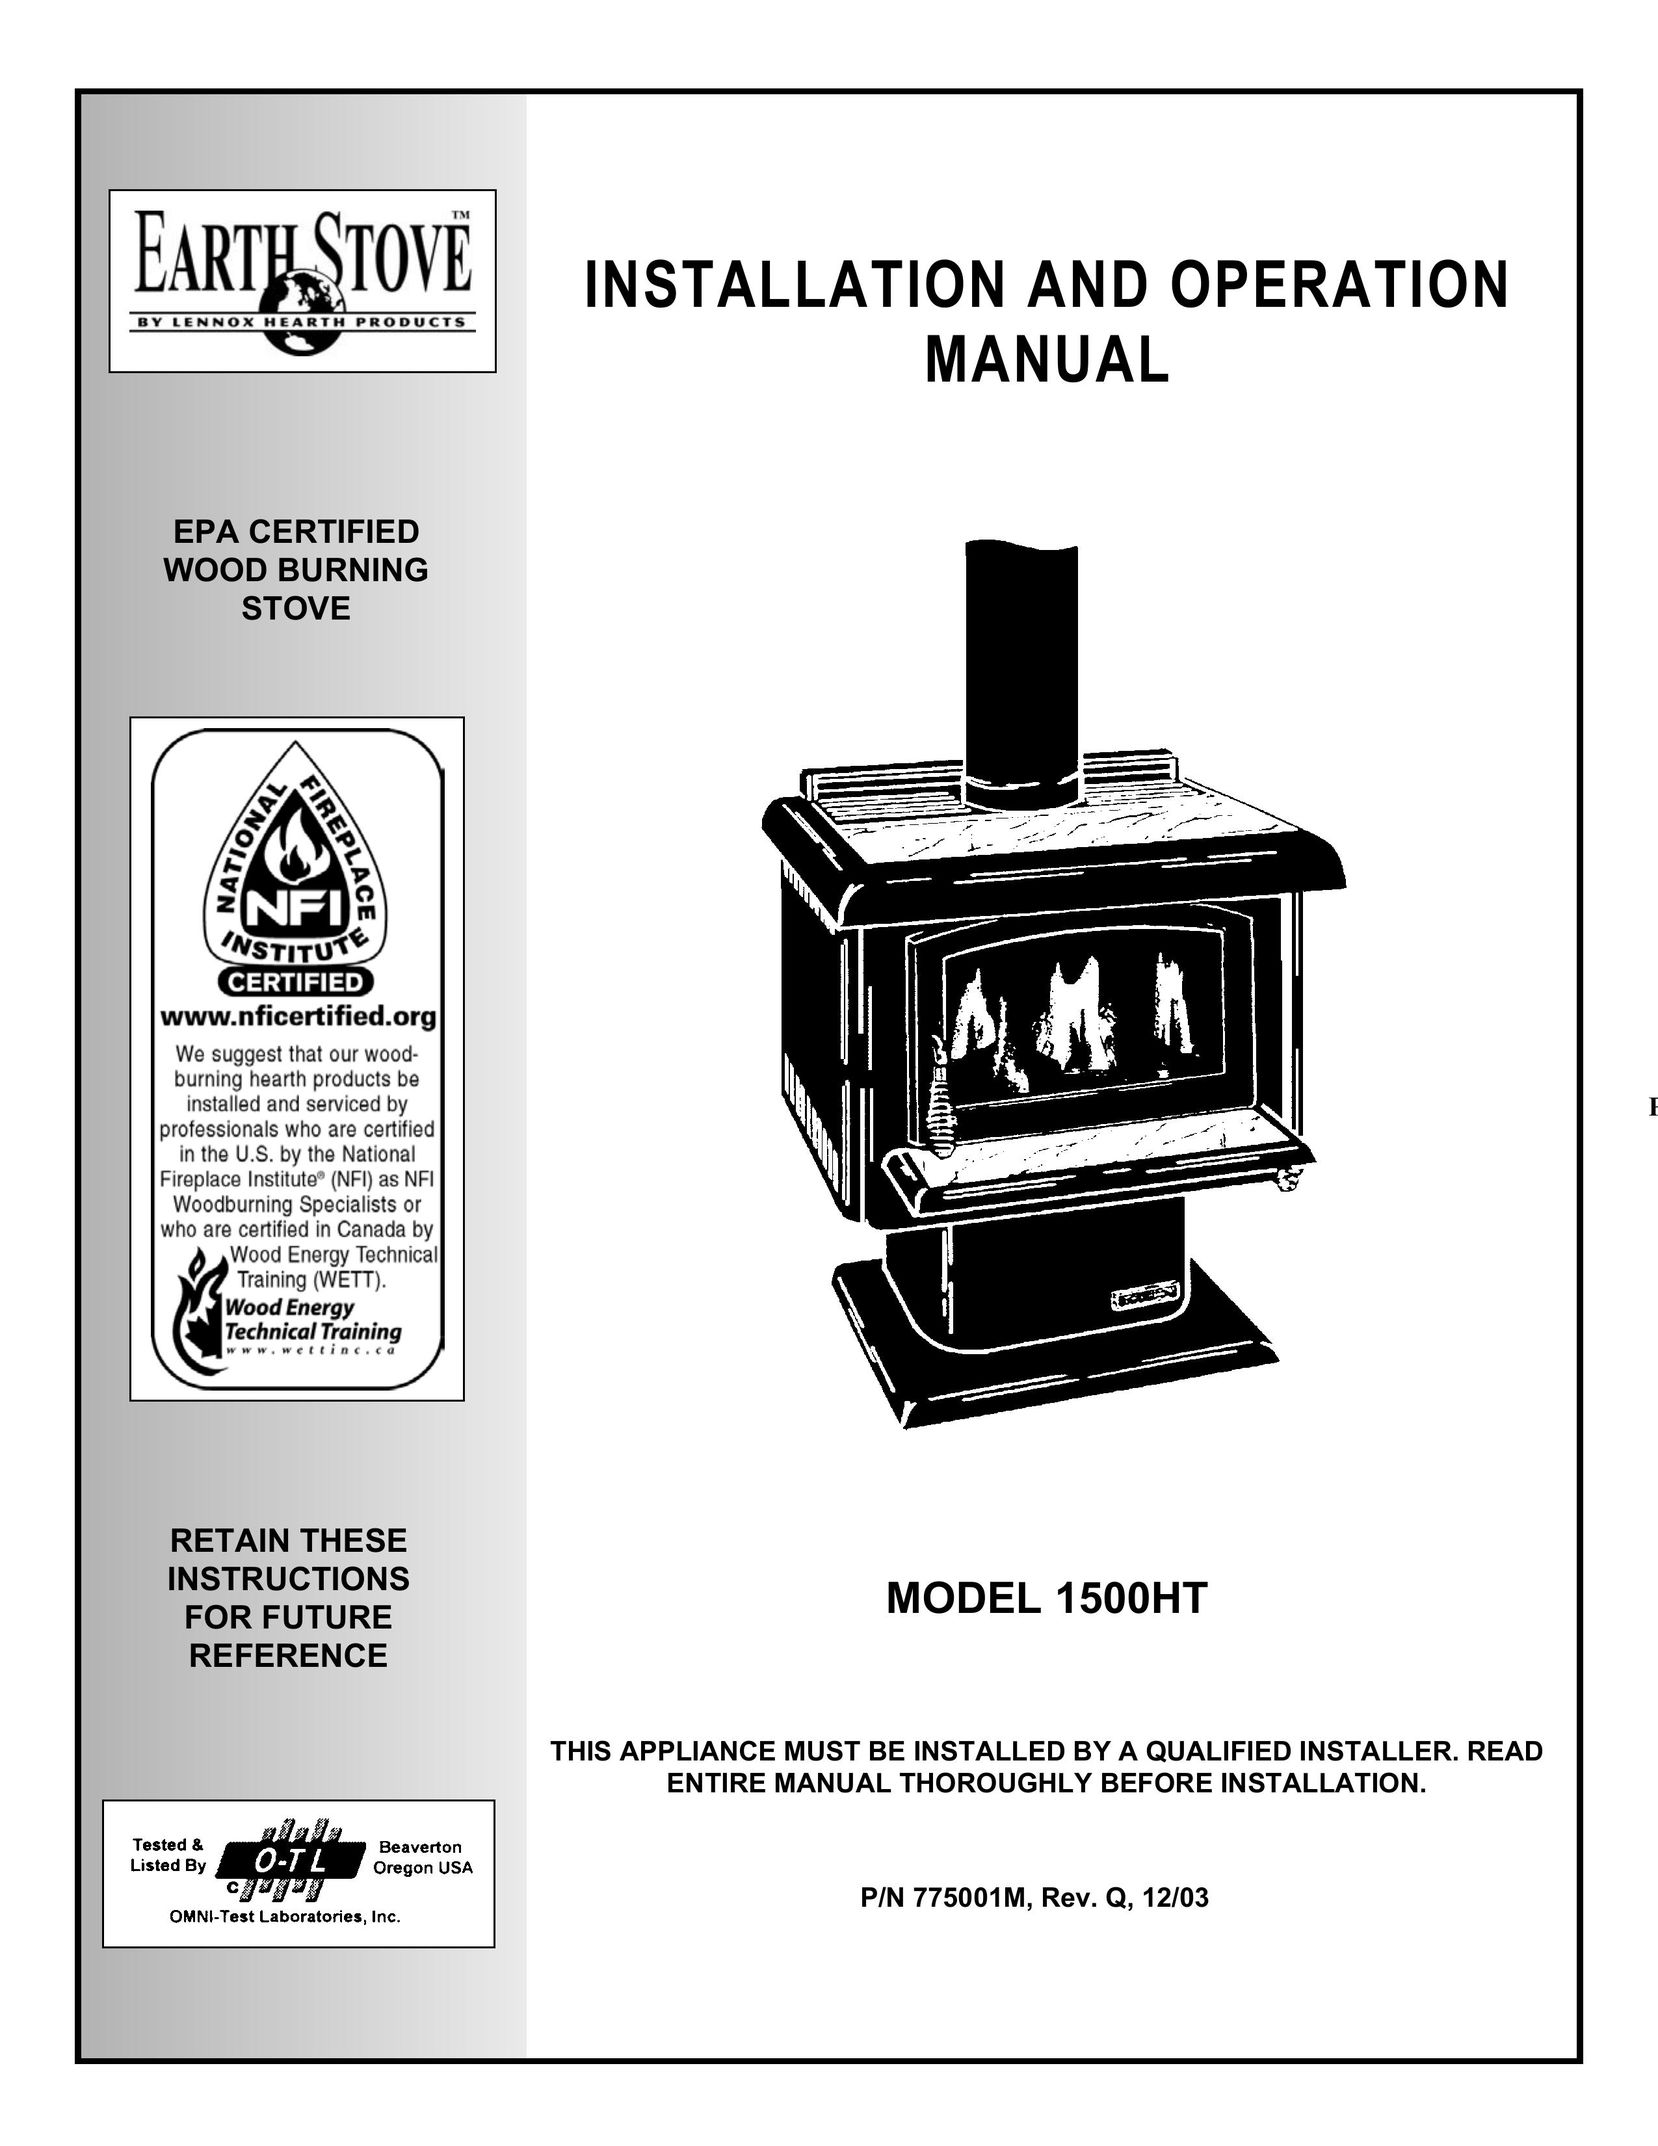 Milwaukee 1500HT Stove User Manual